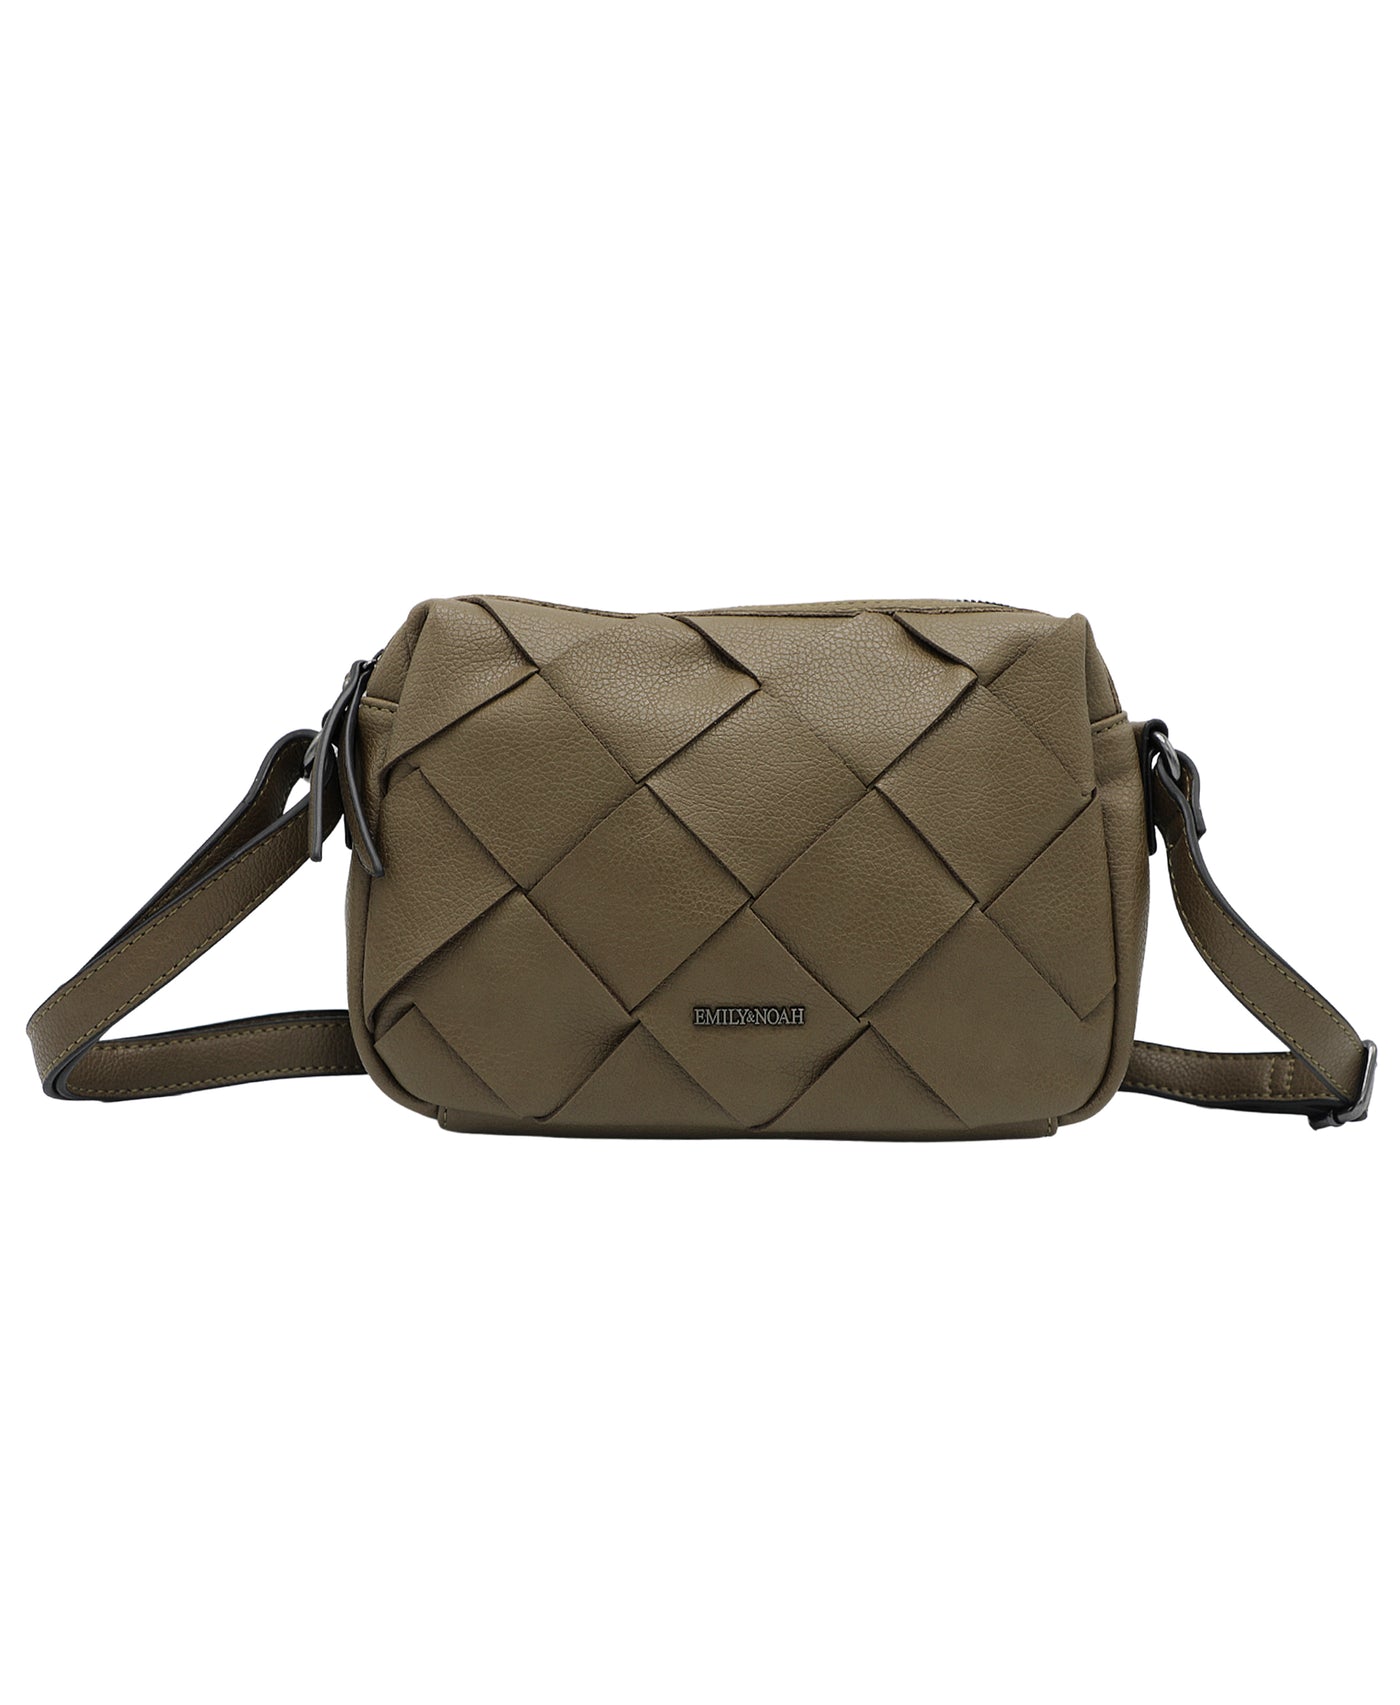 Woven Vegan Leather Crossbody Bag image 1